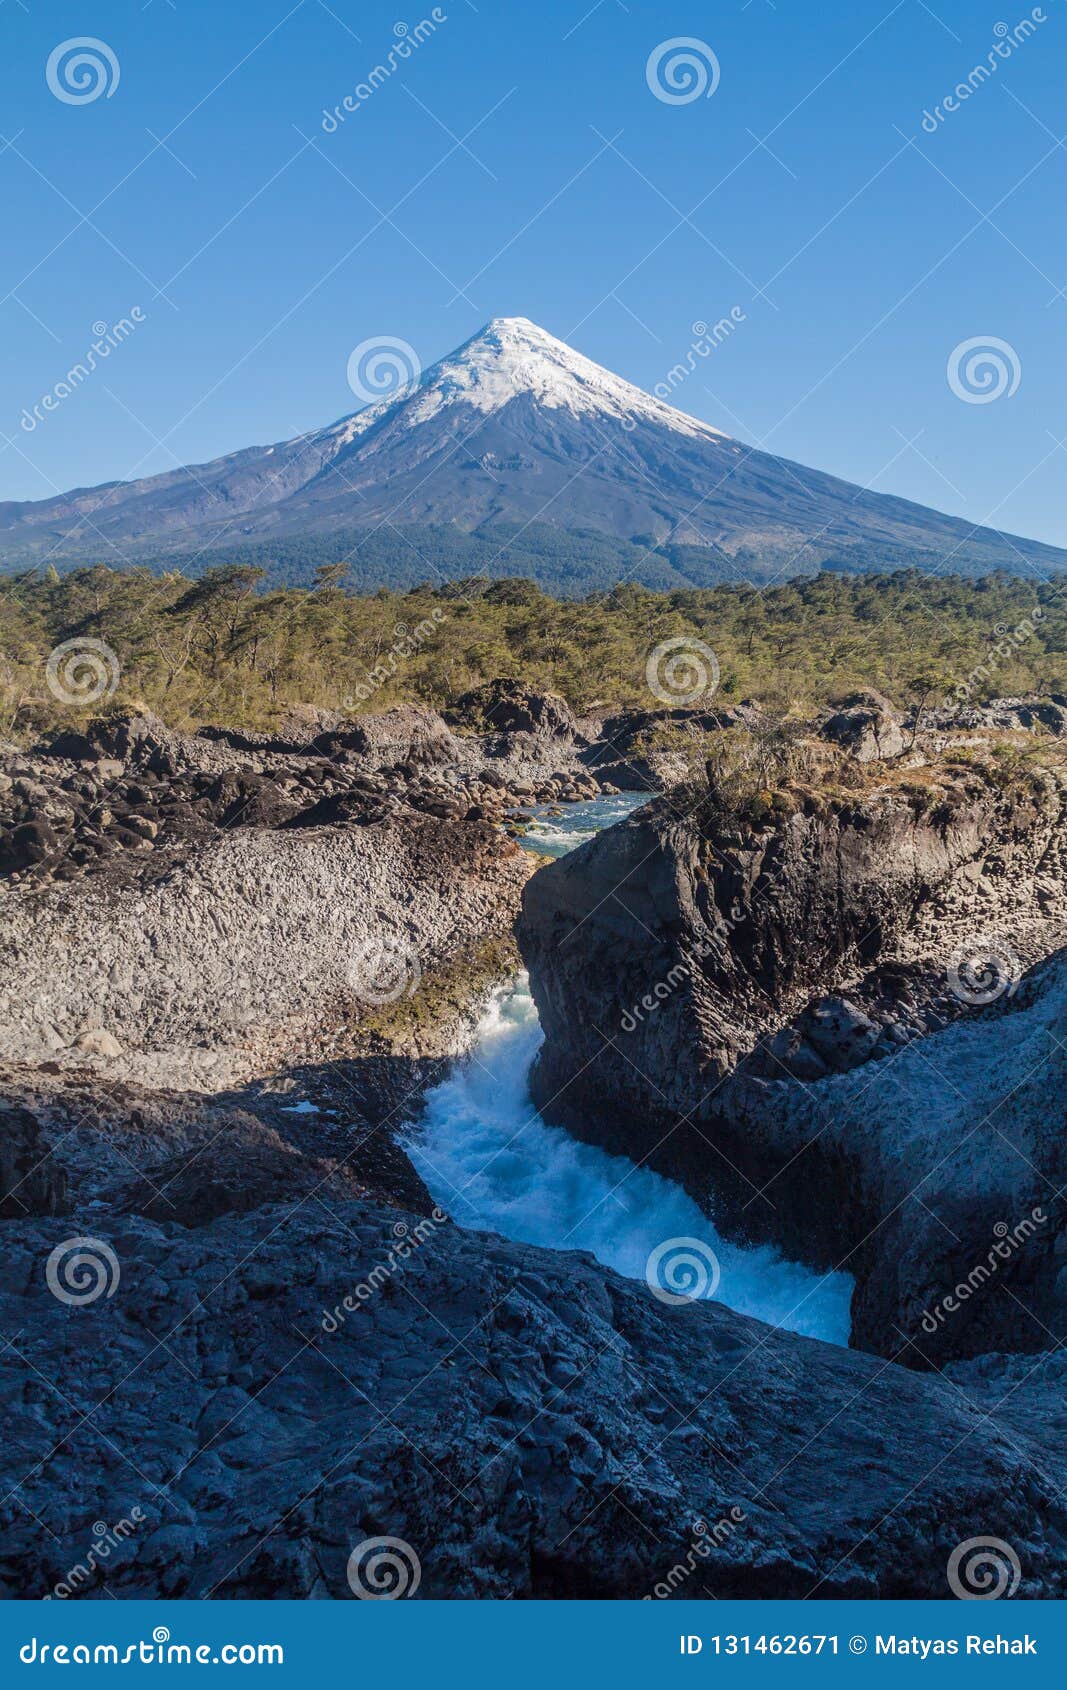 saltos del petrohue waterfalls and volcano osorno